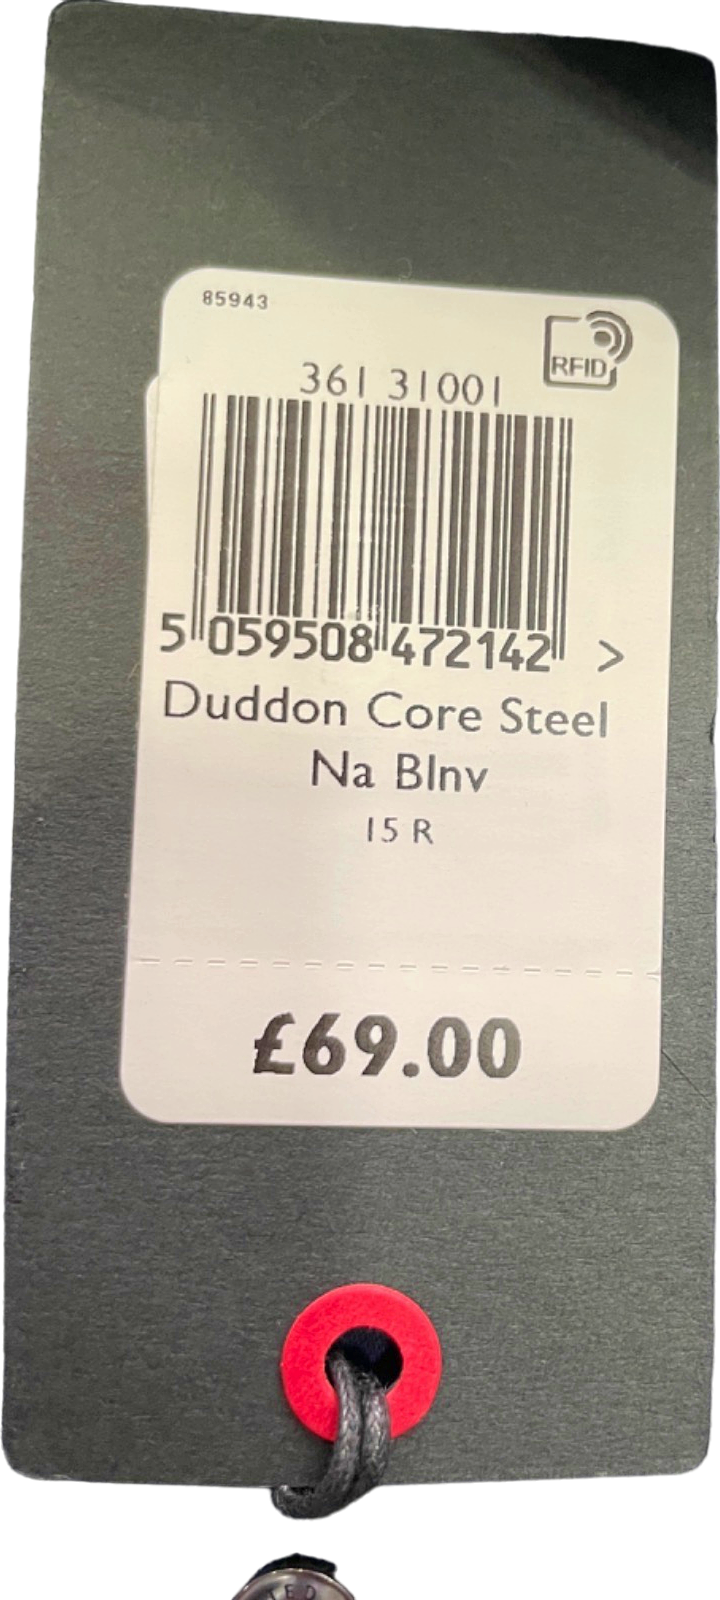 Ted Baker Navy Duddon Core Steel Slim Fit Shirt UK Size 15" Neck